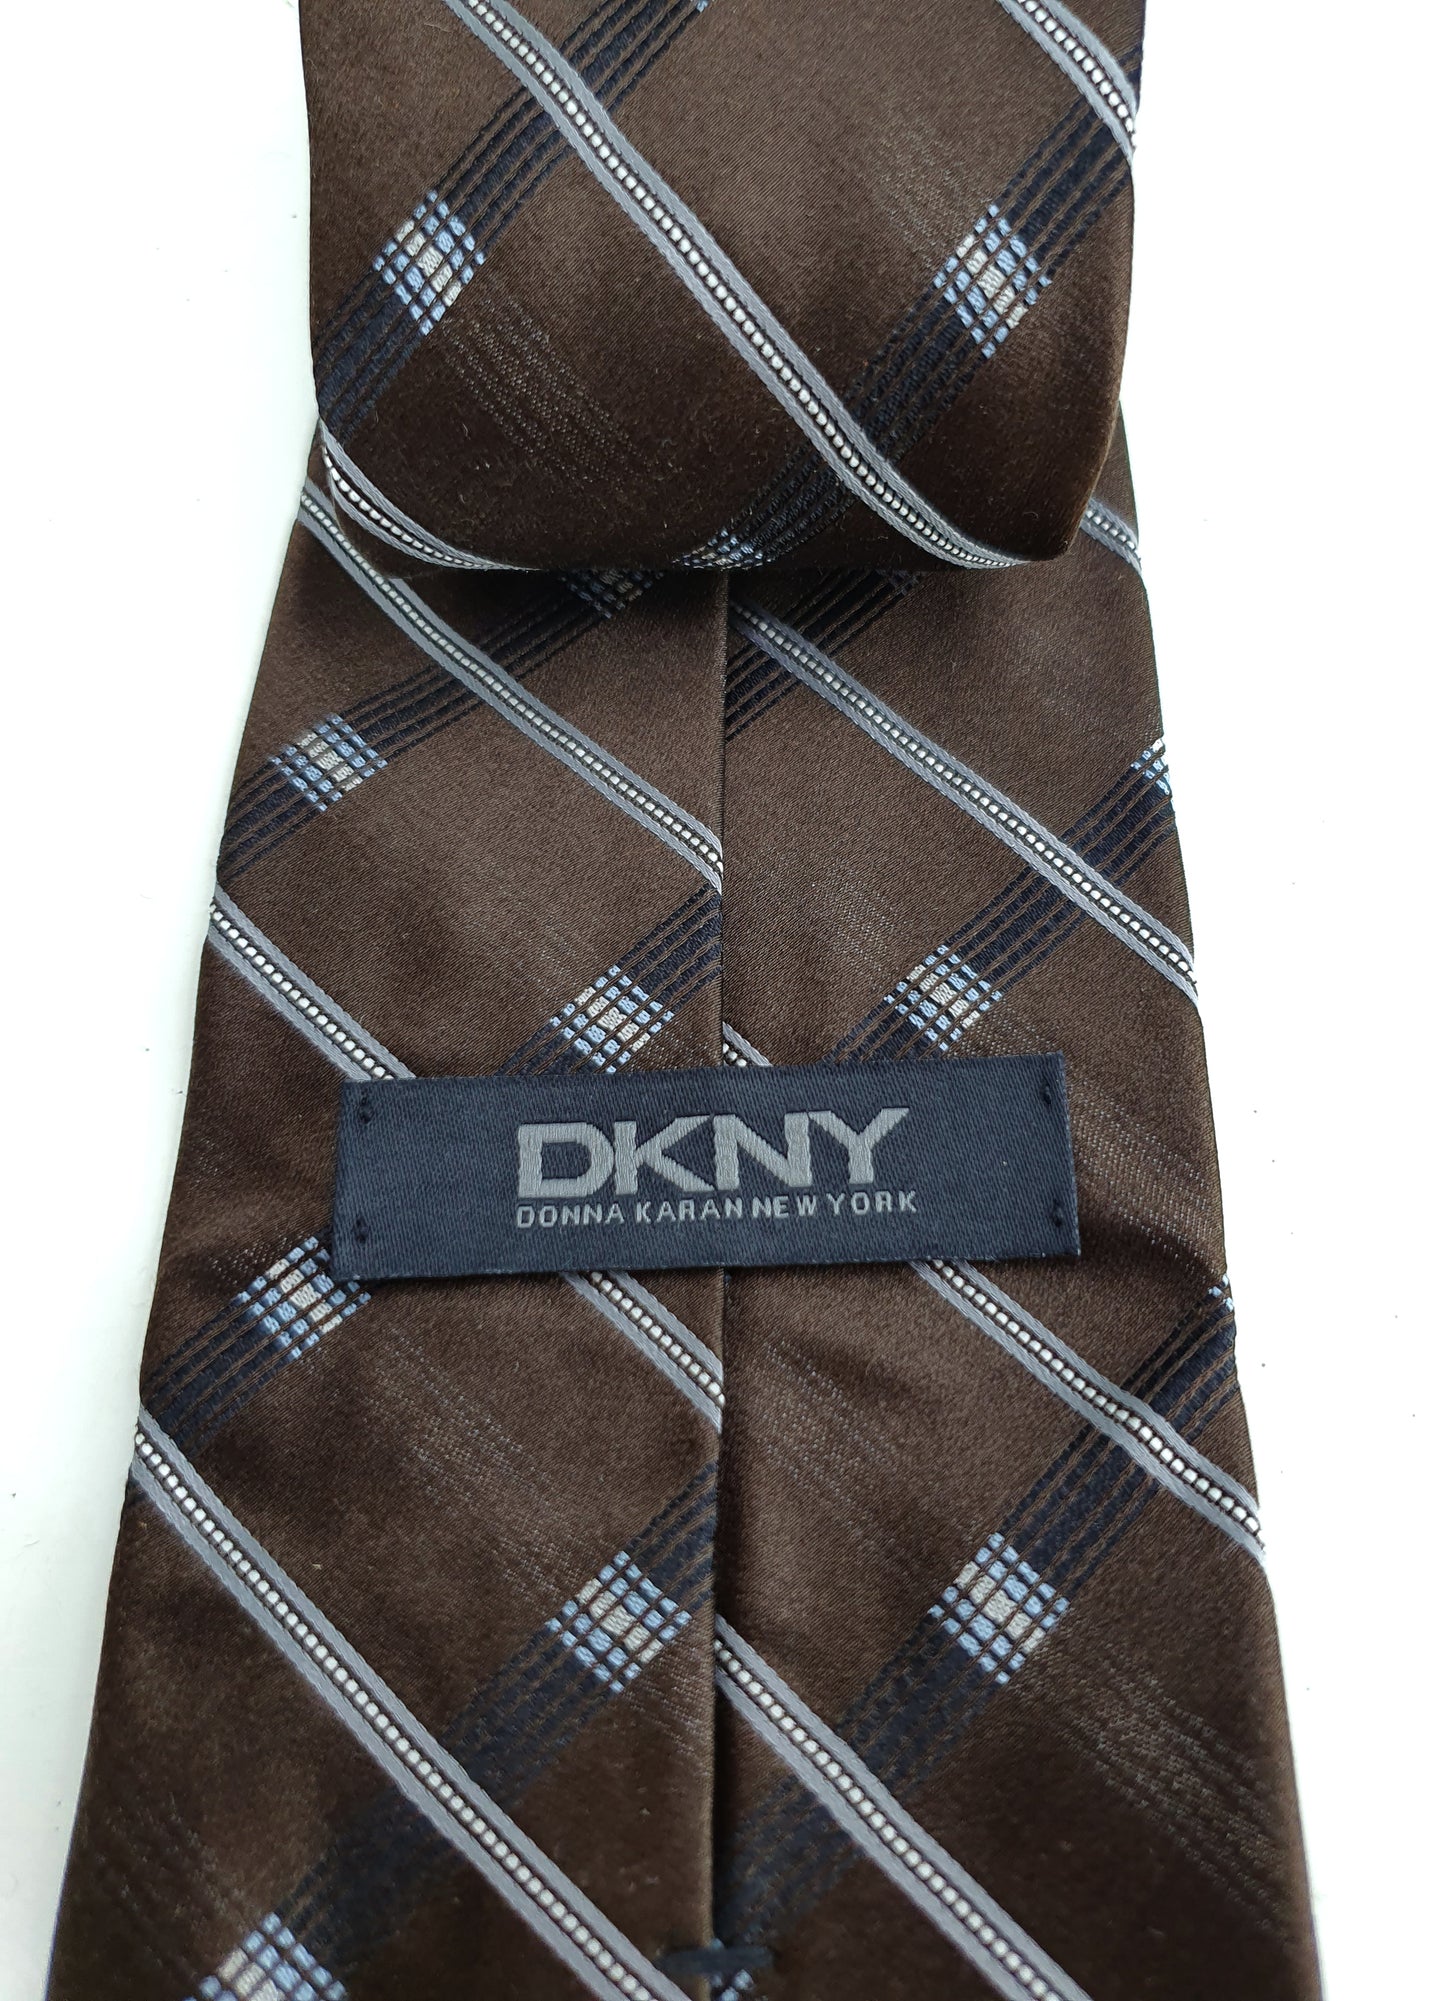 DKNY, tummanruskea silkkikravatti, made in U.S.A